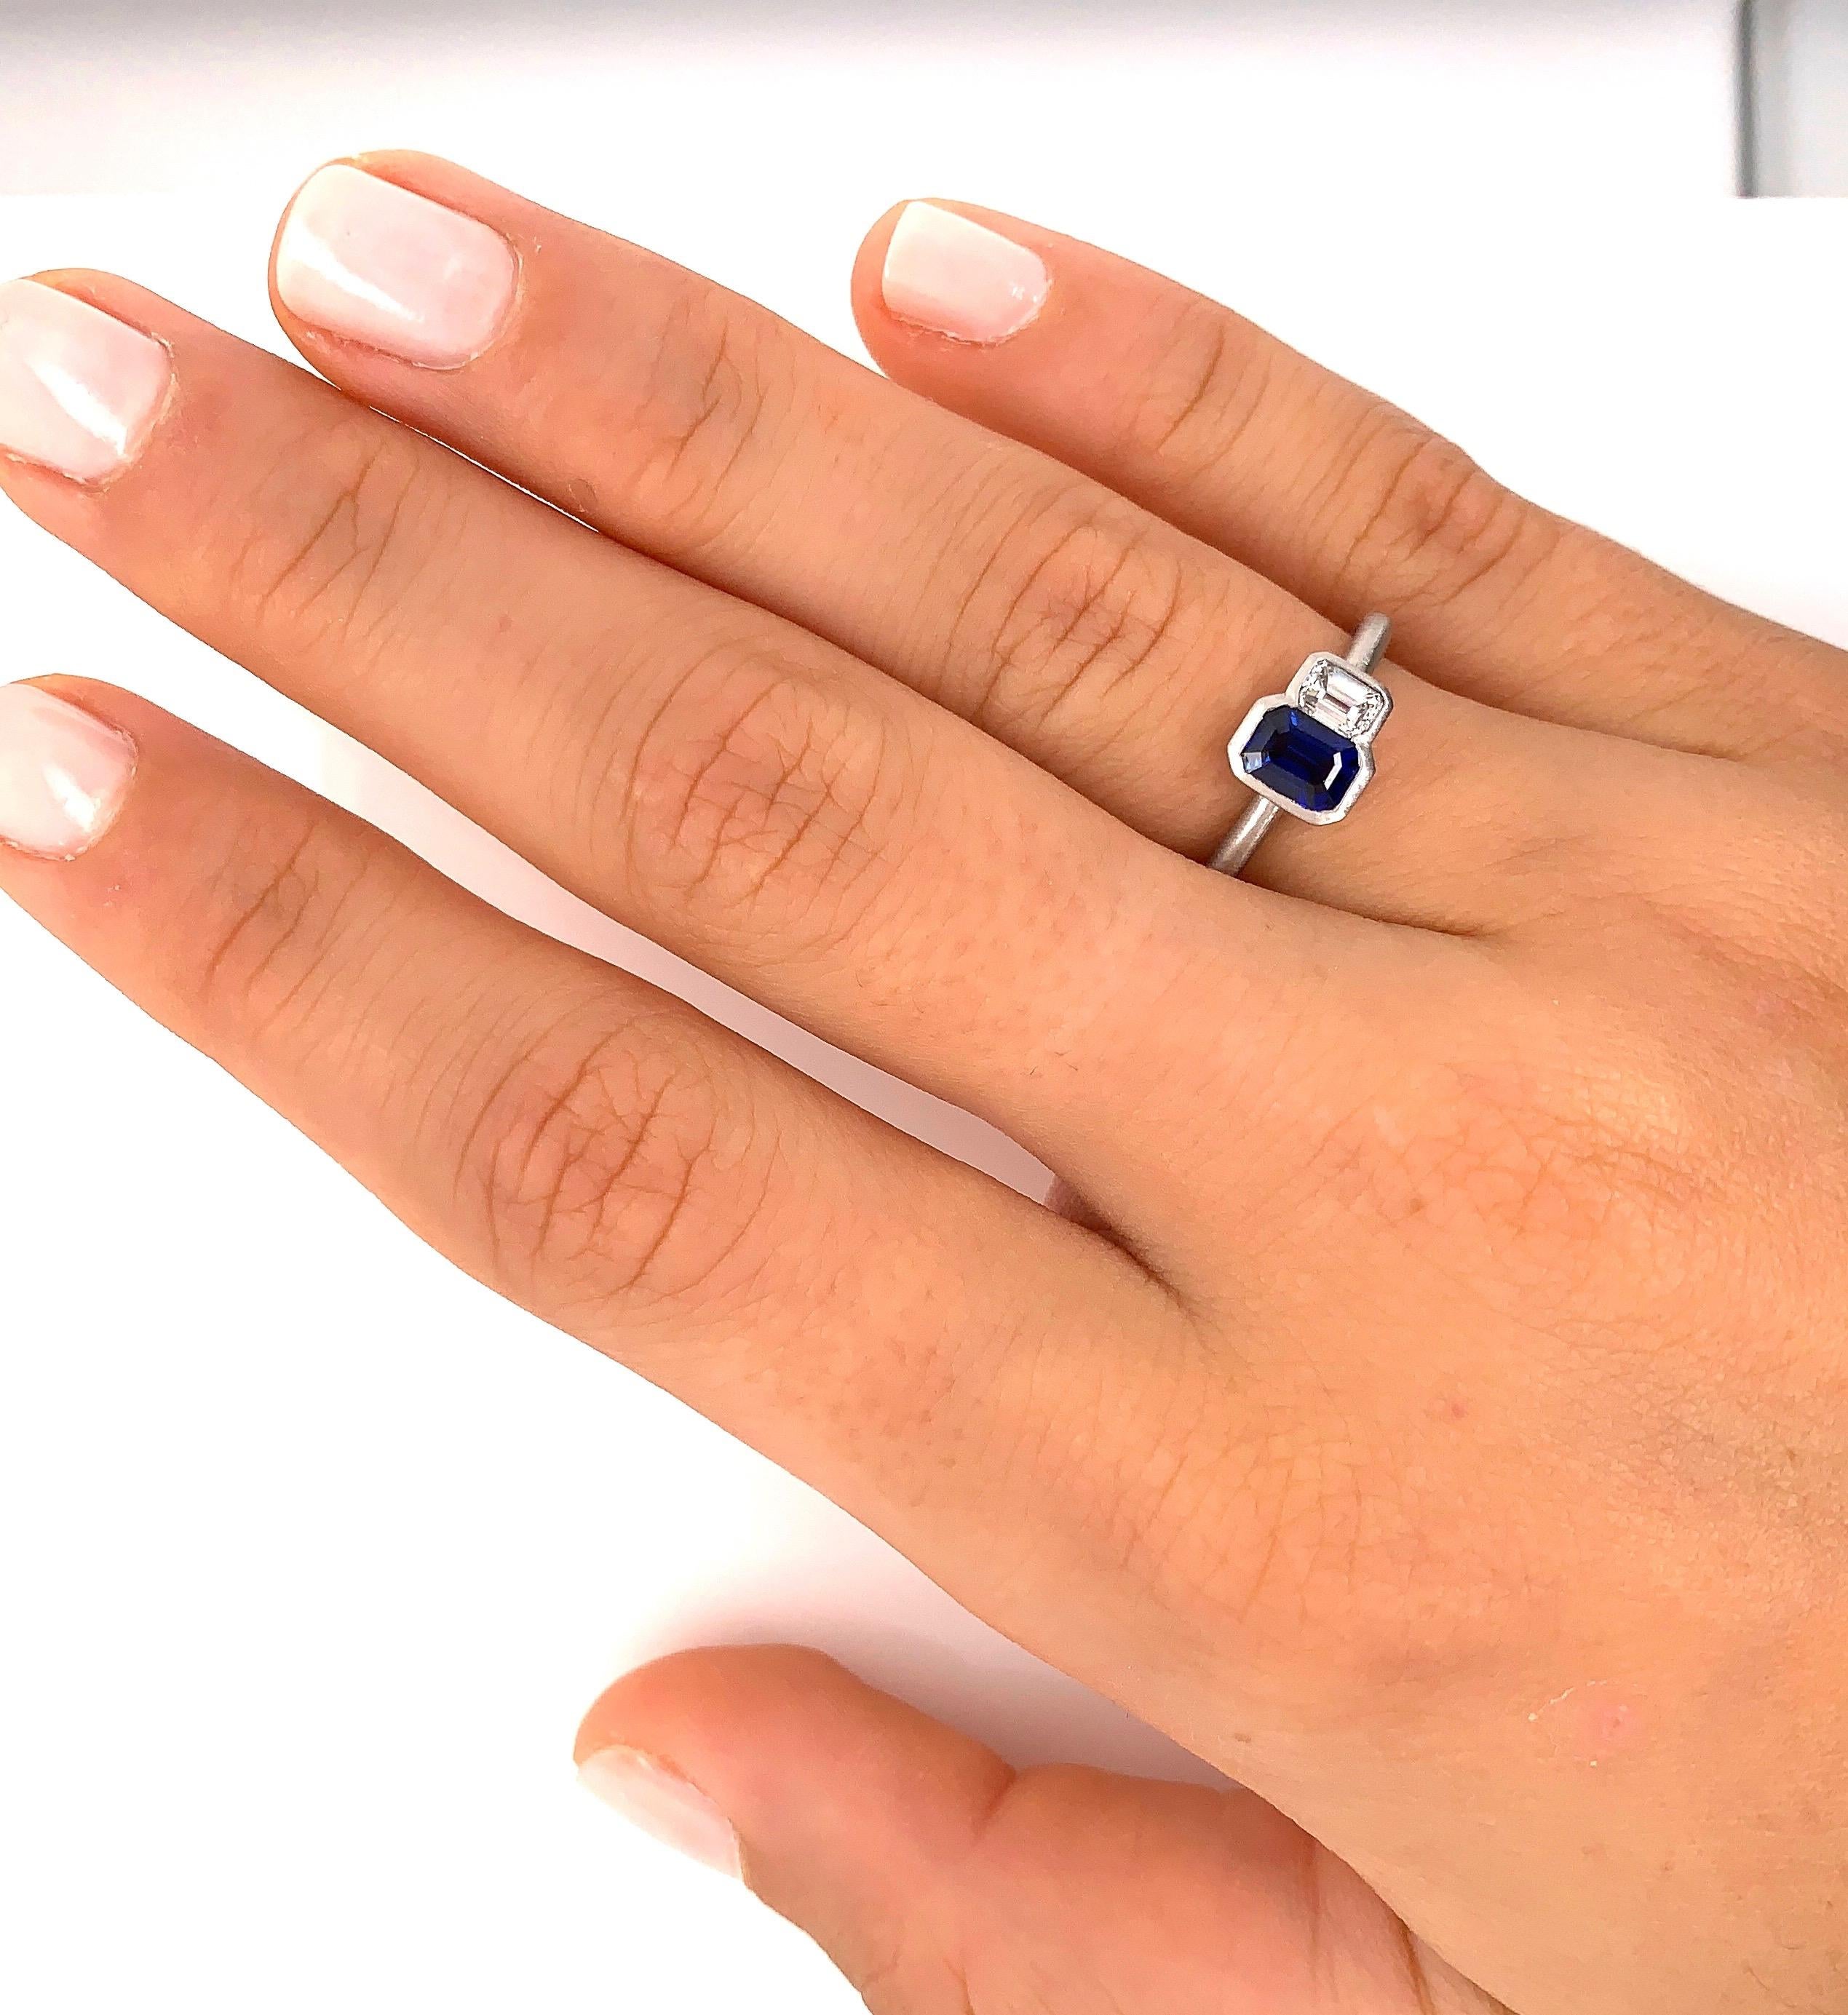 Matte Platinum Diamond & Sapphire Ring
Diamond .25ct    Sapphire .69ct
Approximately 3/8